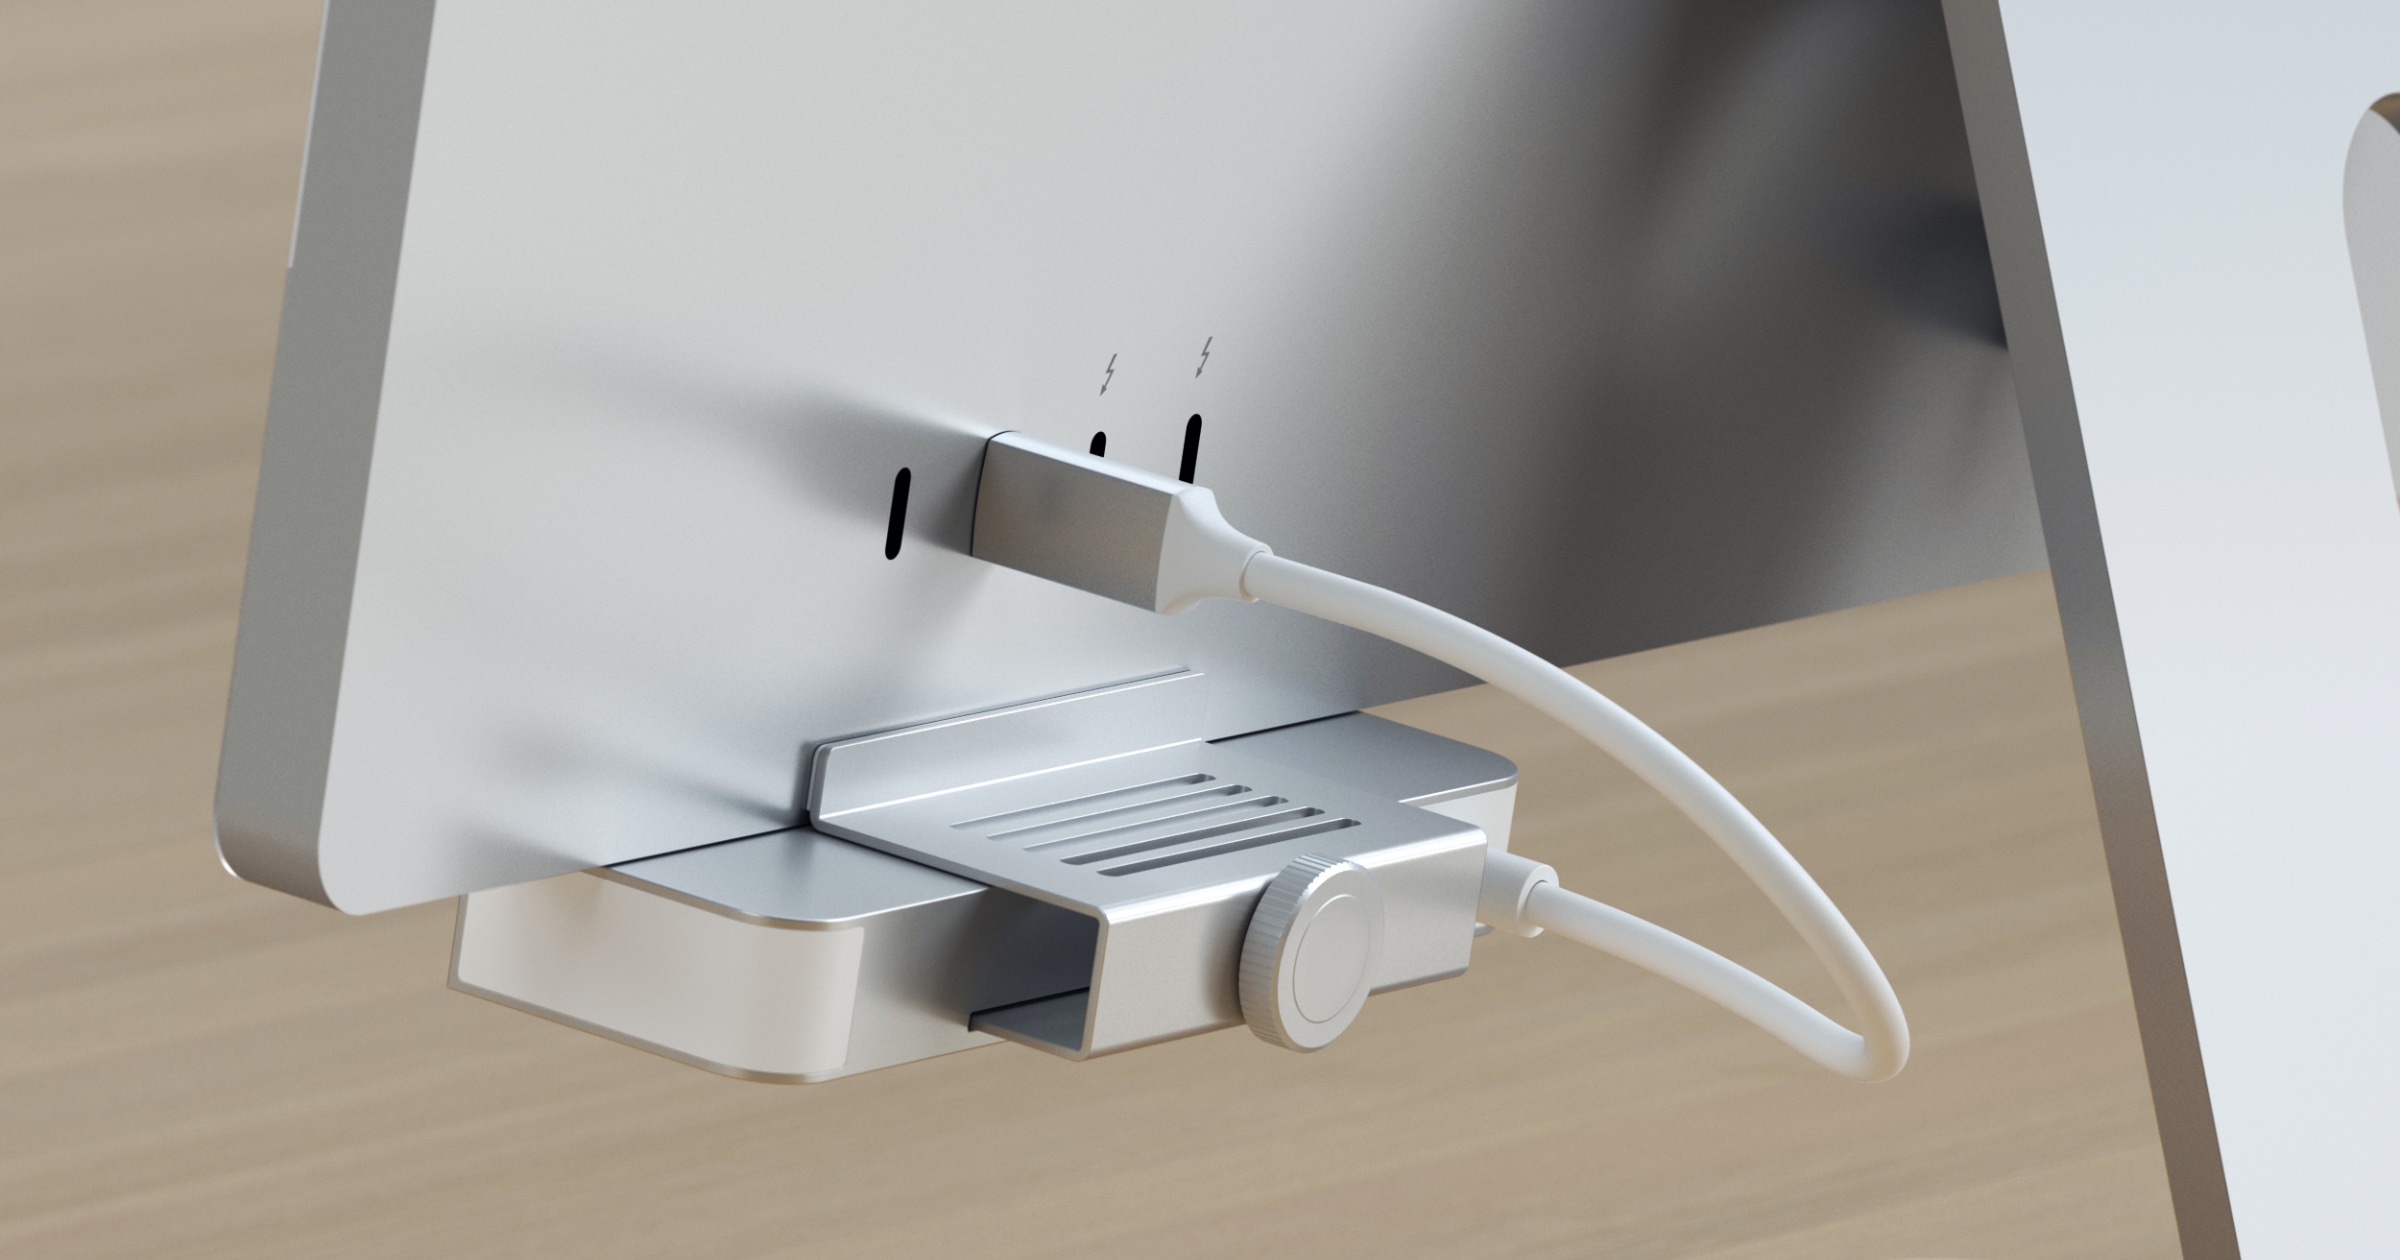 Satechi USB-C clamp hub for iMac